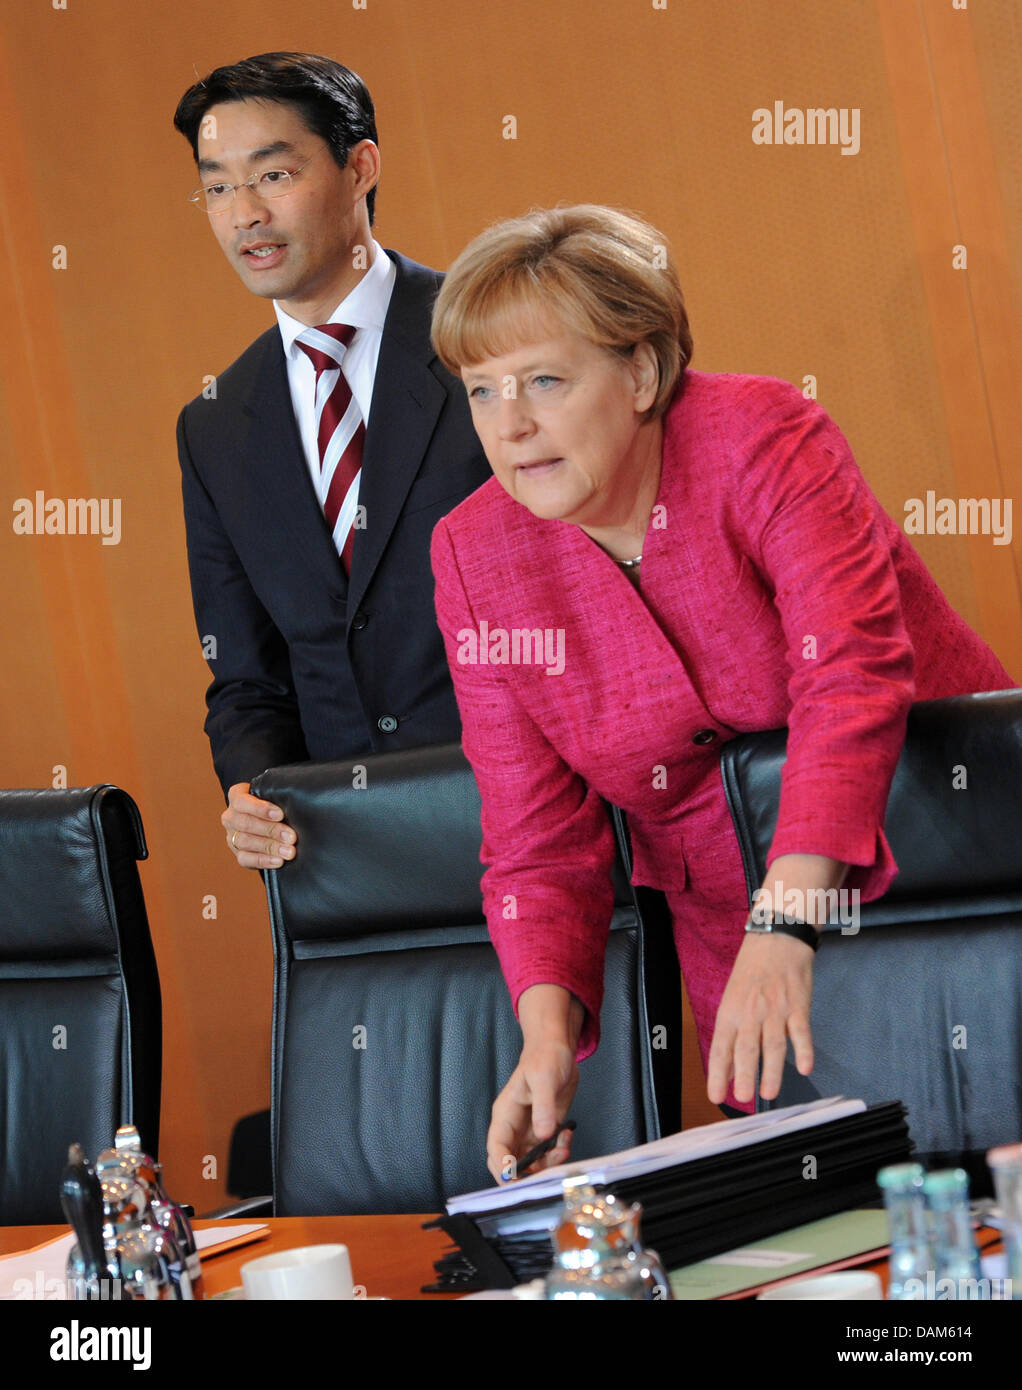 Image result for deutschland vice premier Philipp R??sler